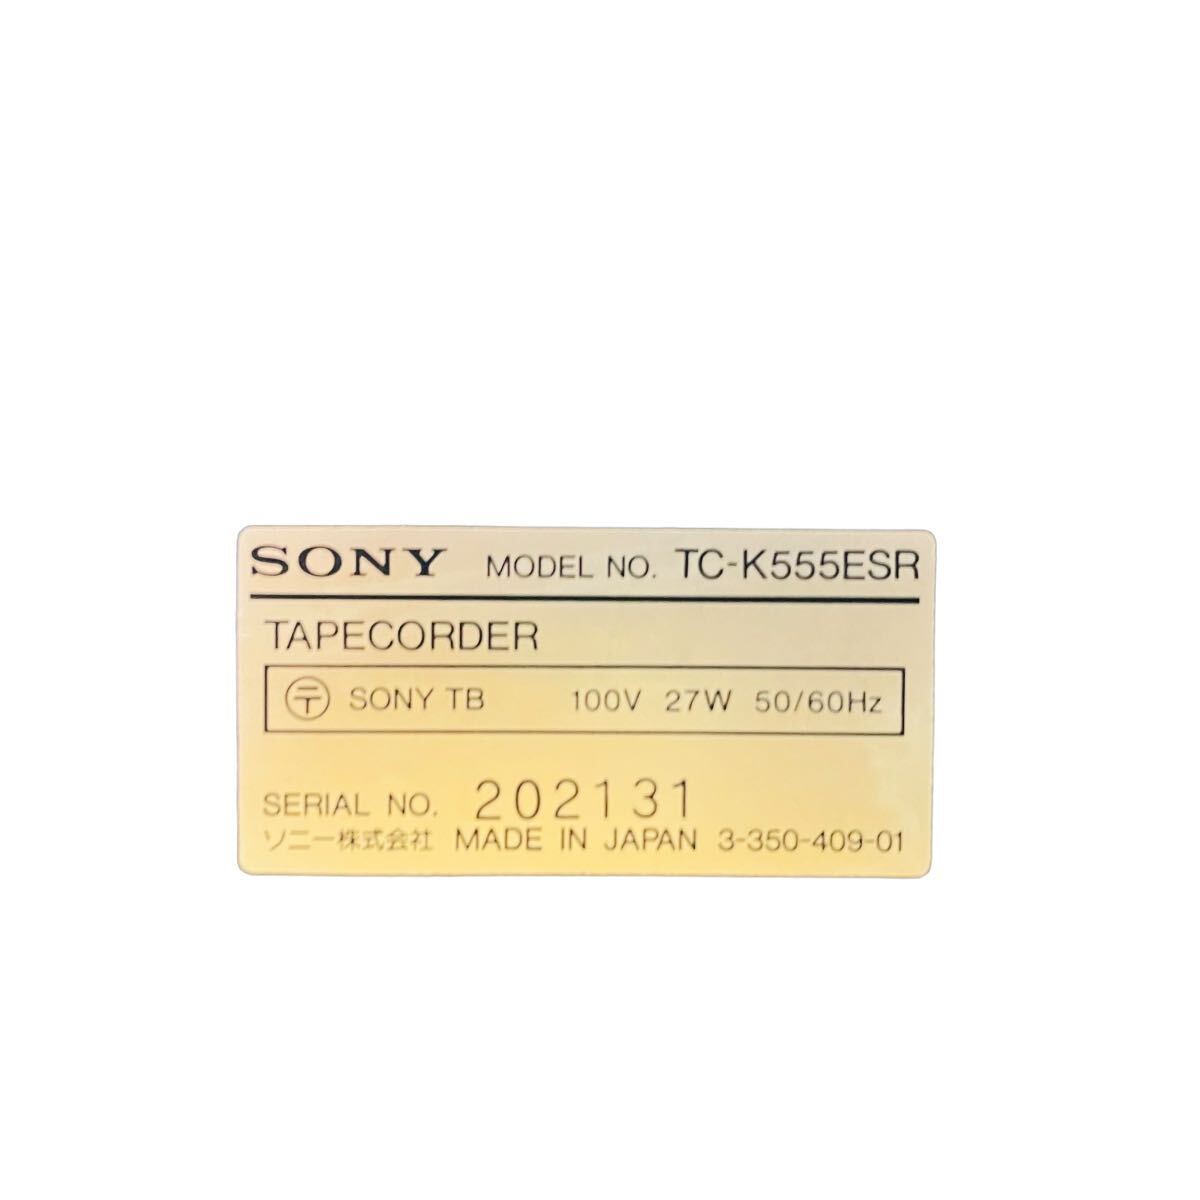 A05015 SONY cassette deck TC-K555ESR TEAC Sony tape recorder stereo audio equipment 